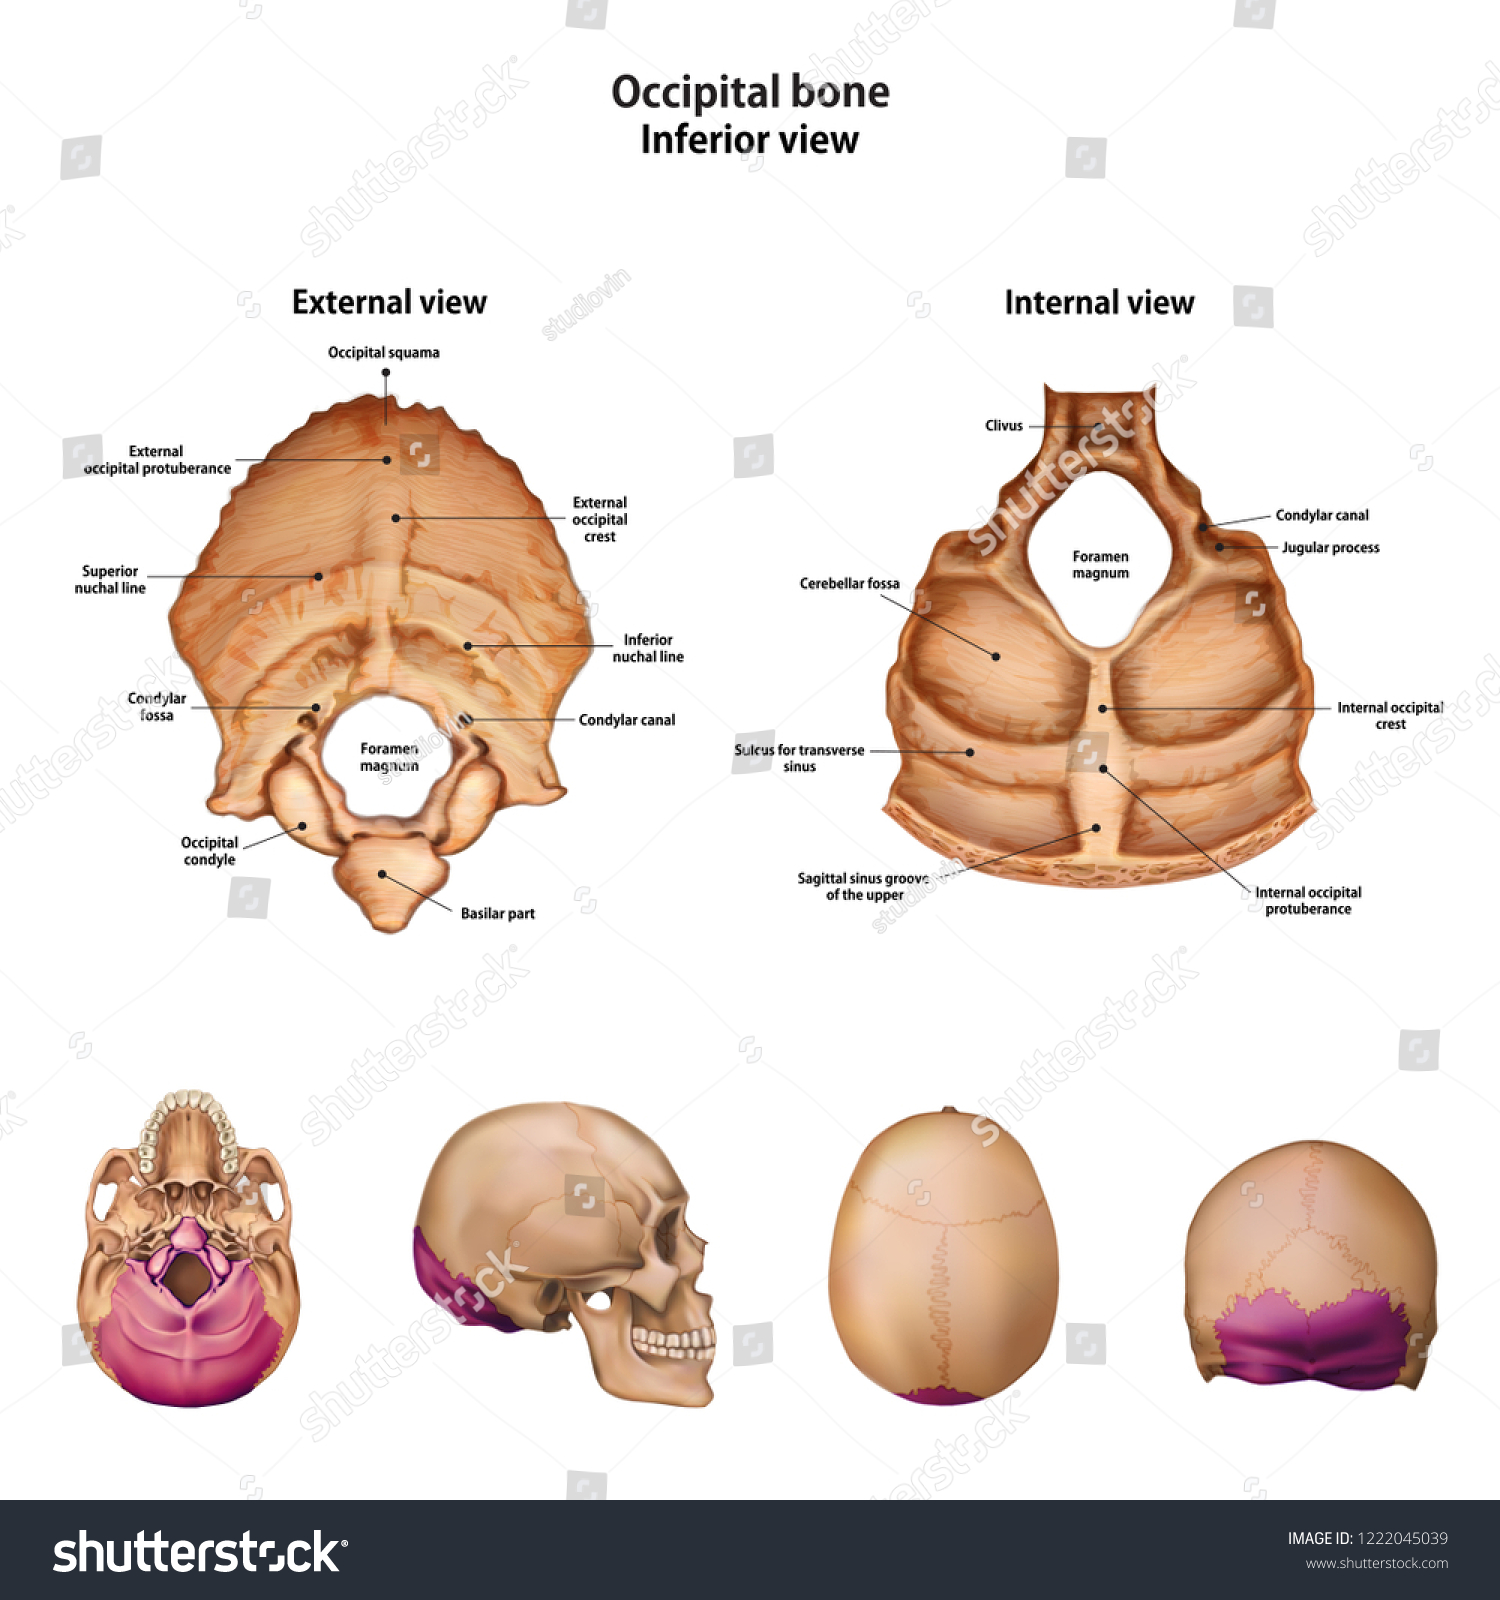 Occipital Bone Name Description All Sites Stock Vector Royalty Free 1222045039 Shutterstock 3812